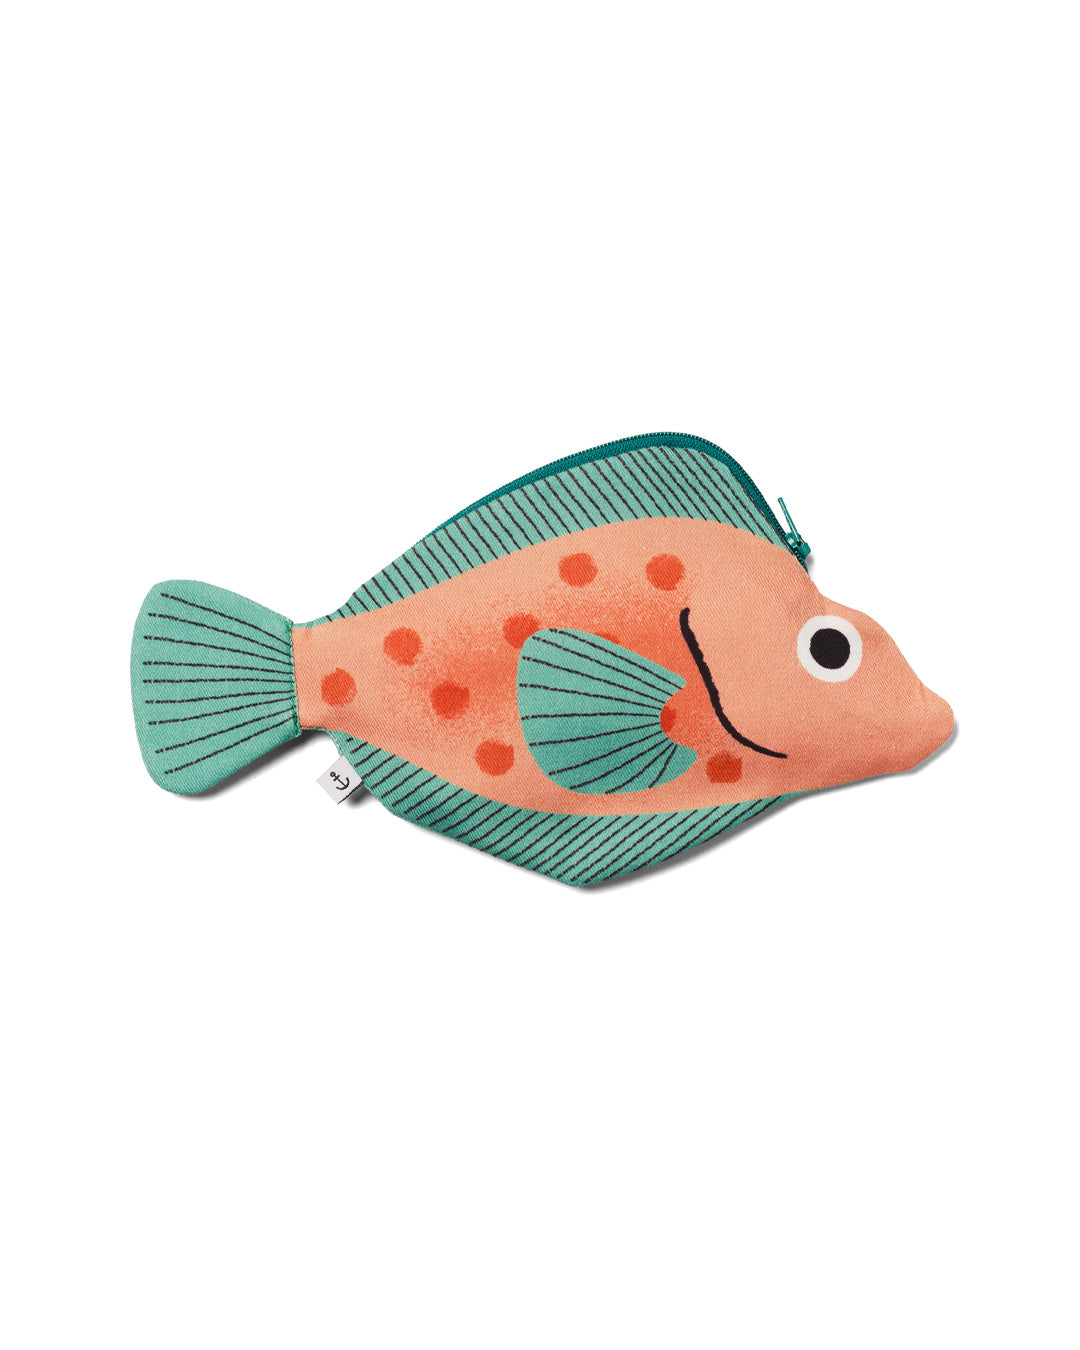 Rosefish handmade handcrafted bac purse case textile fun fish ocean